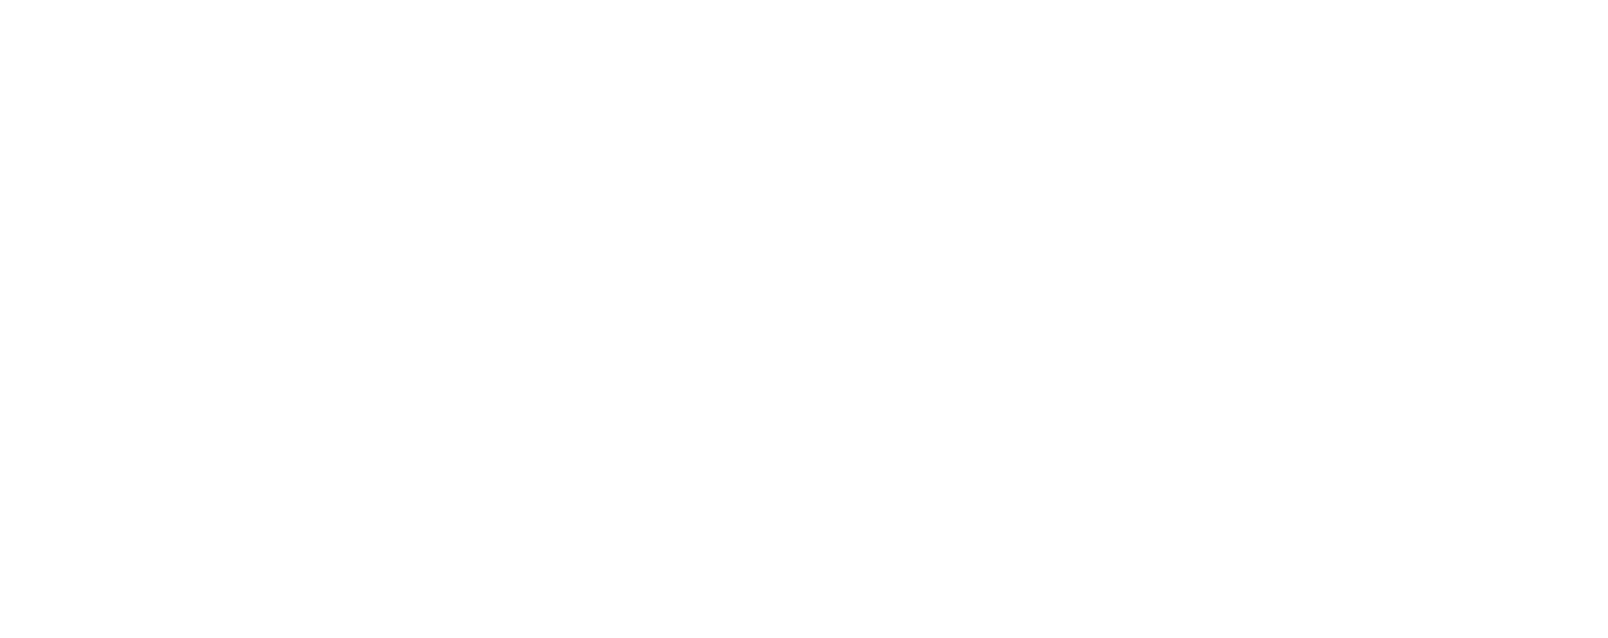 shawnee forward logo white